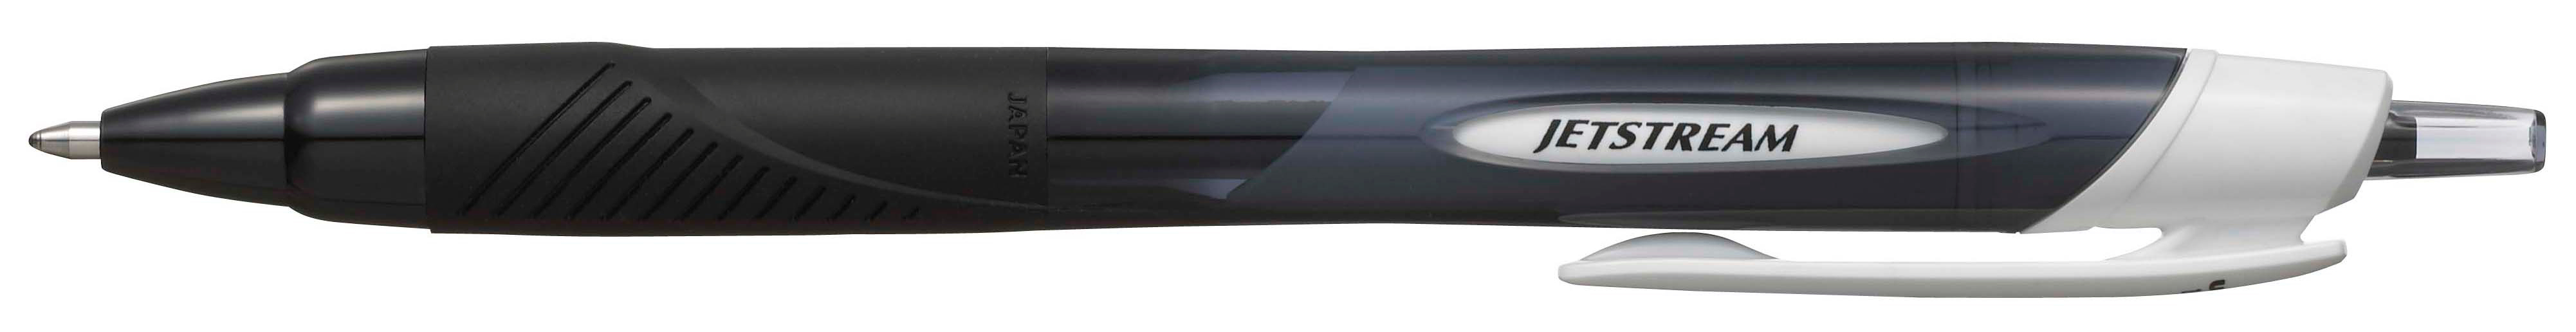 UNI-BALL Stylo à bille Jetstream SXN-150S-2 SCHWARZ noir, 2 pcs.